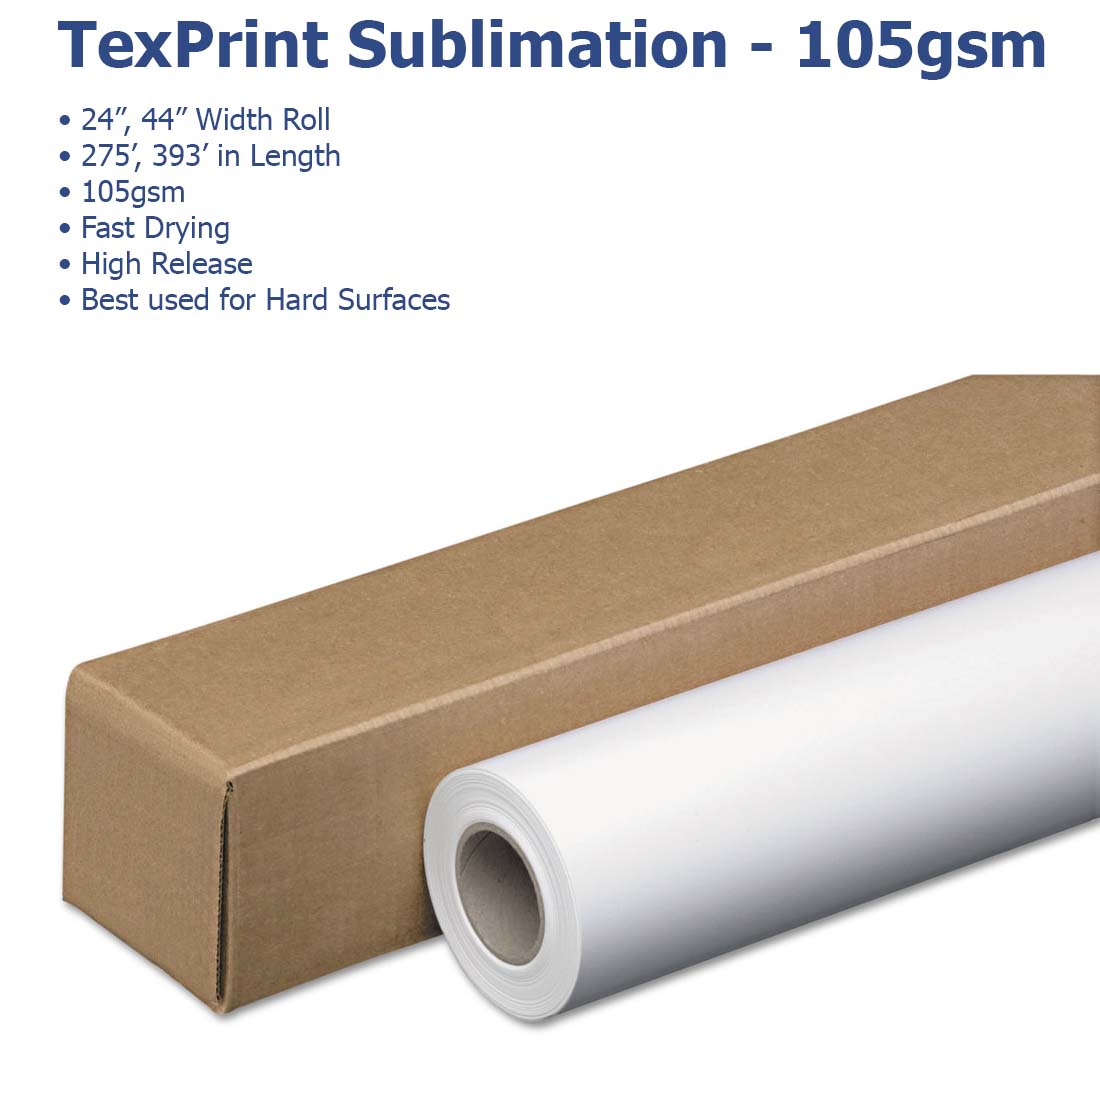 TexPrint Sublimation Paper - Rolls - Joto Imaging Supplies Canada